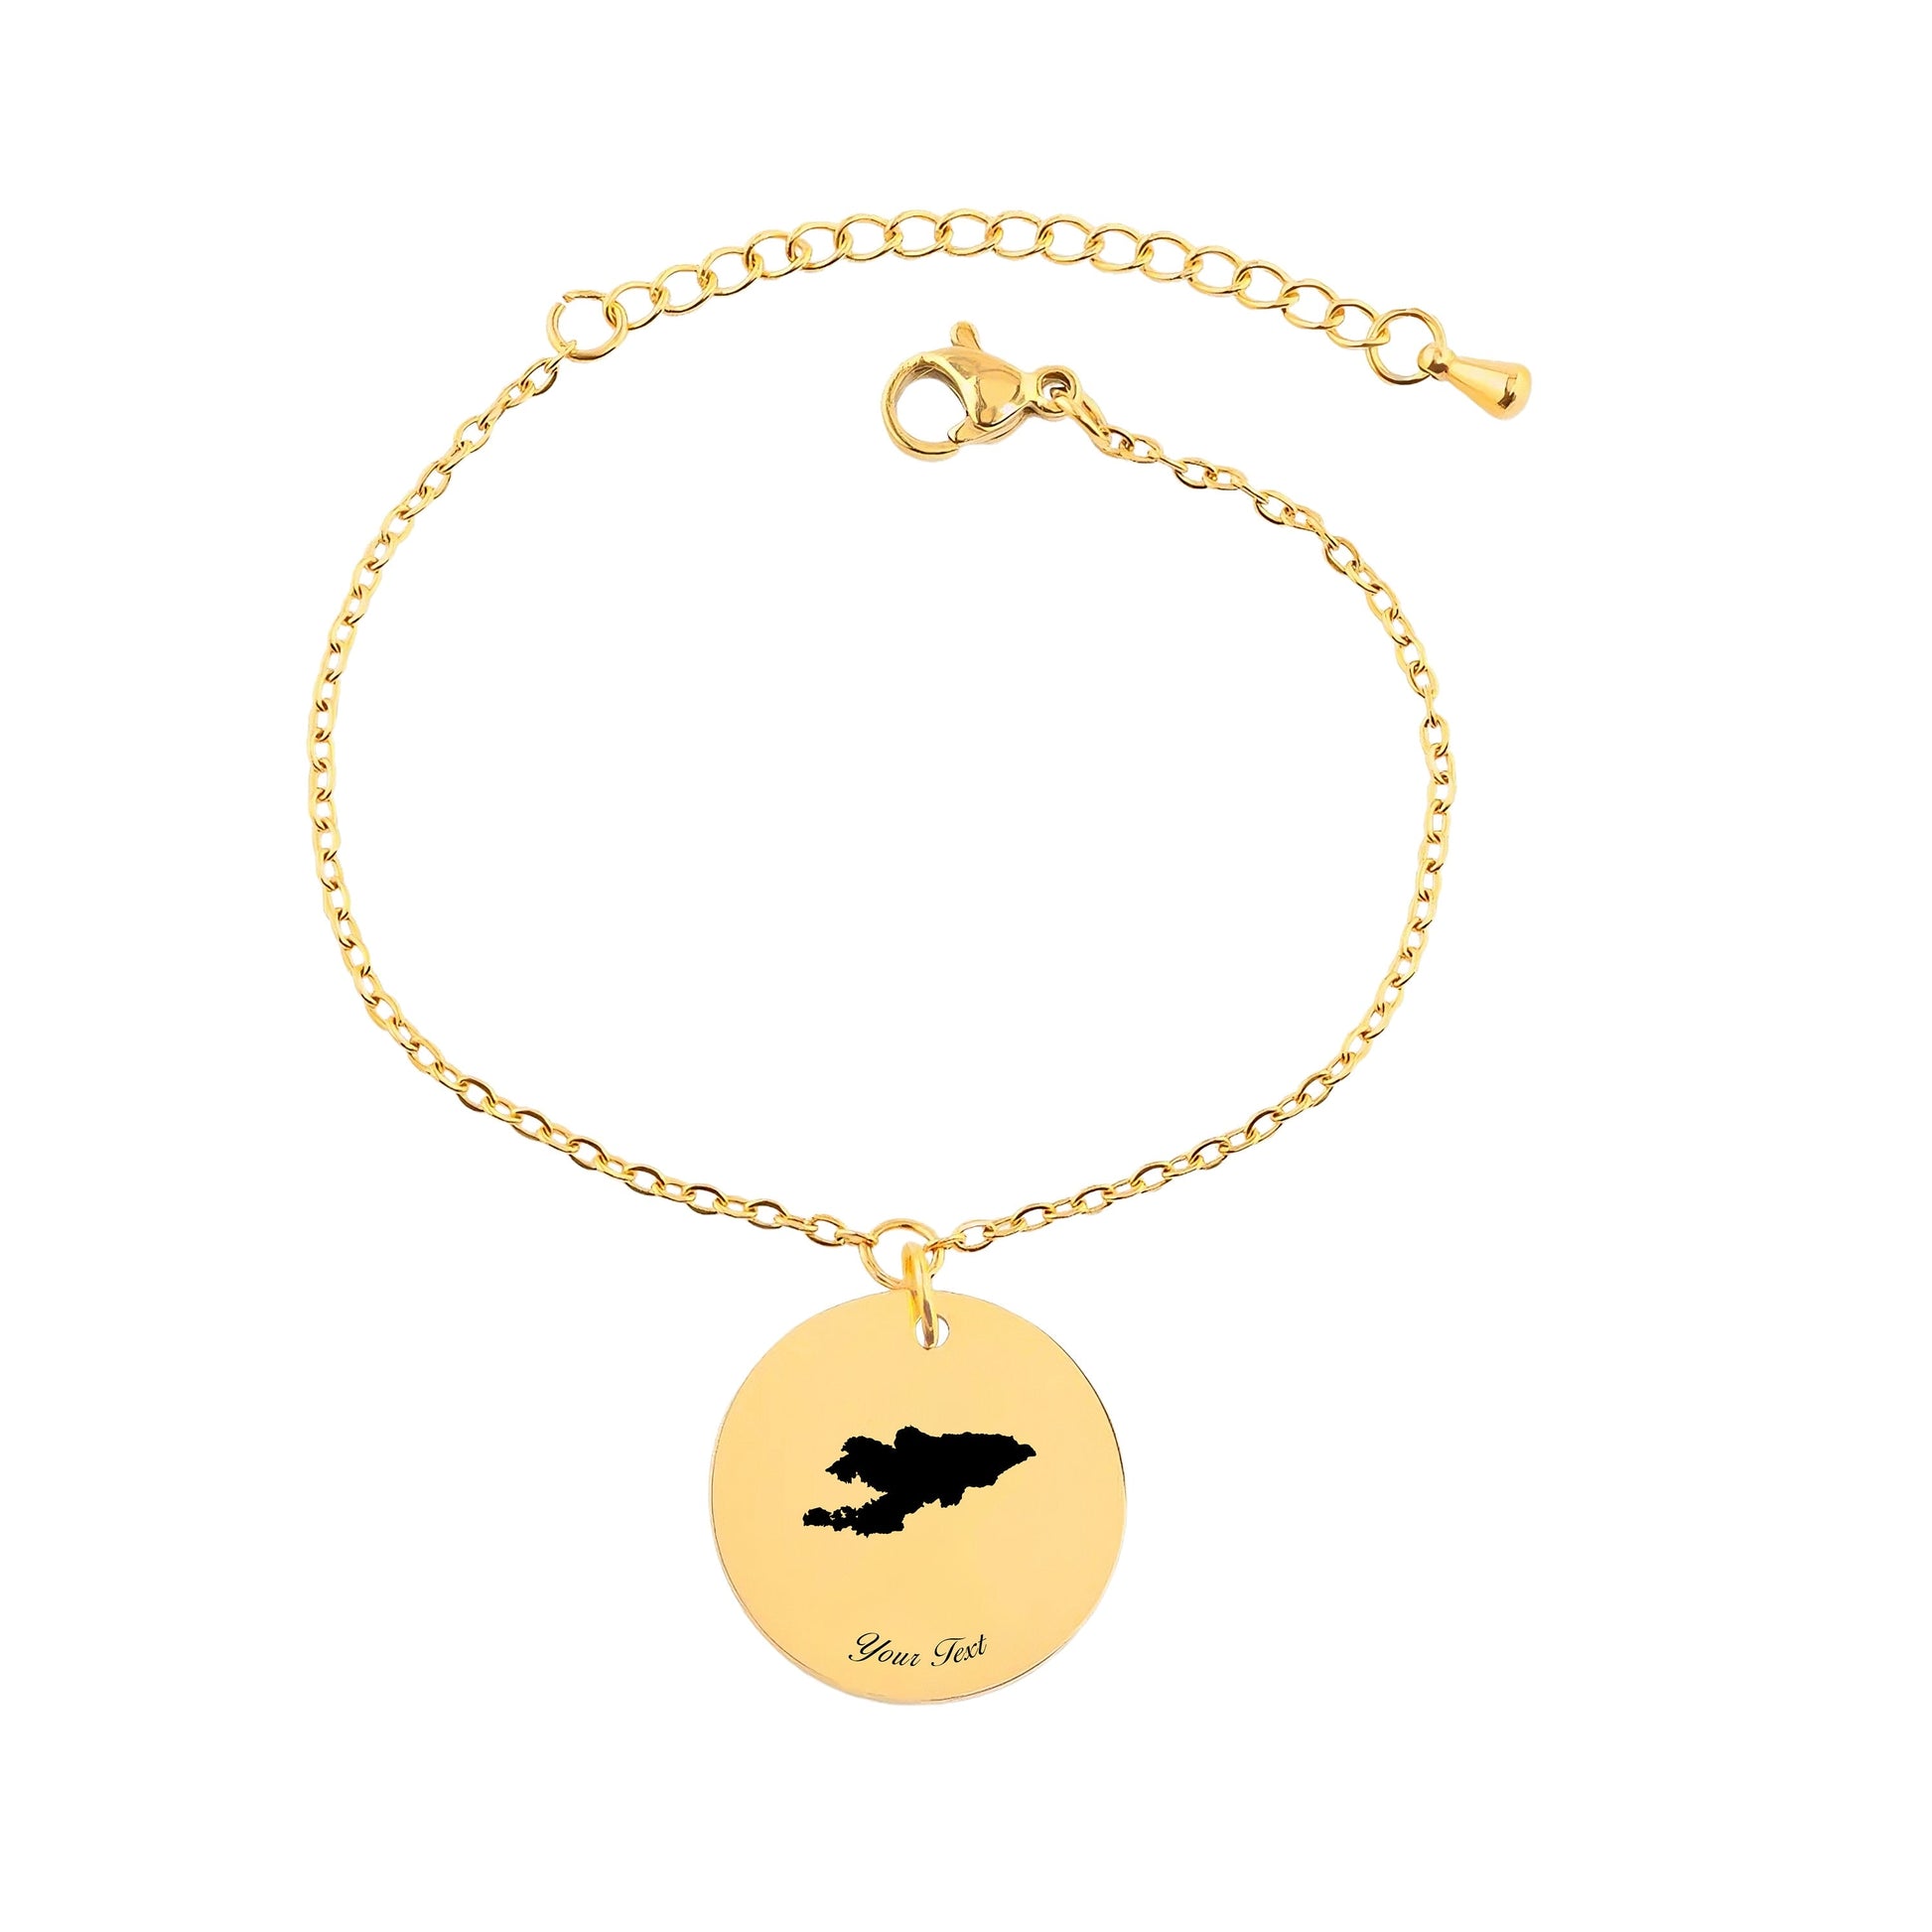 Kyrgyzstan Country Map Bracelet, Your Name Bracelet, Minimalist Bracelet, Personalized Gift, 14K Gold Bracelet, Gift For Him Her